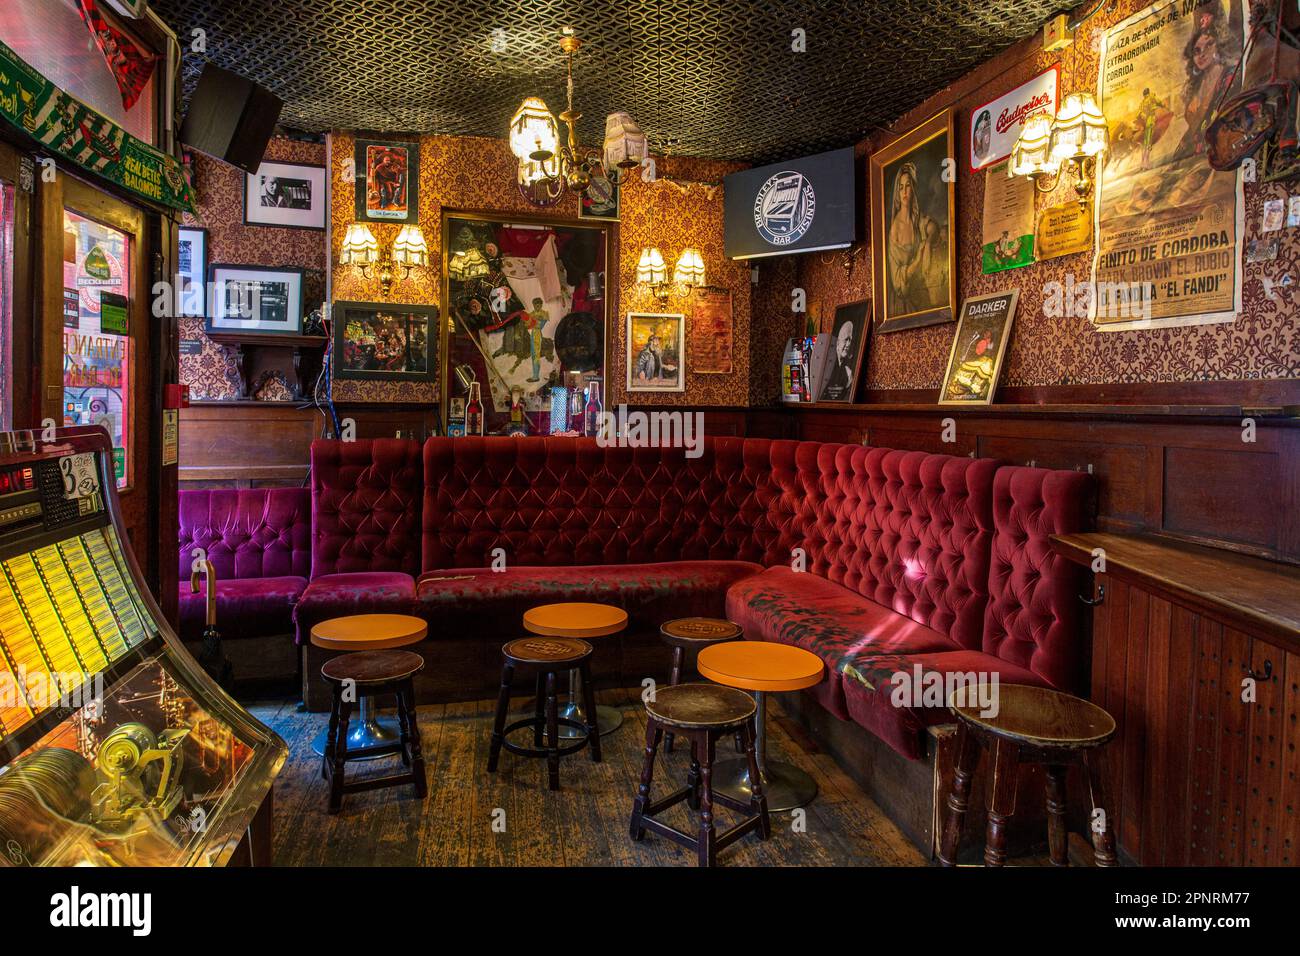 Bradley's Spanish Bar interior on Hanway Street in Fitzrovia district of London, England Stock Photo